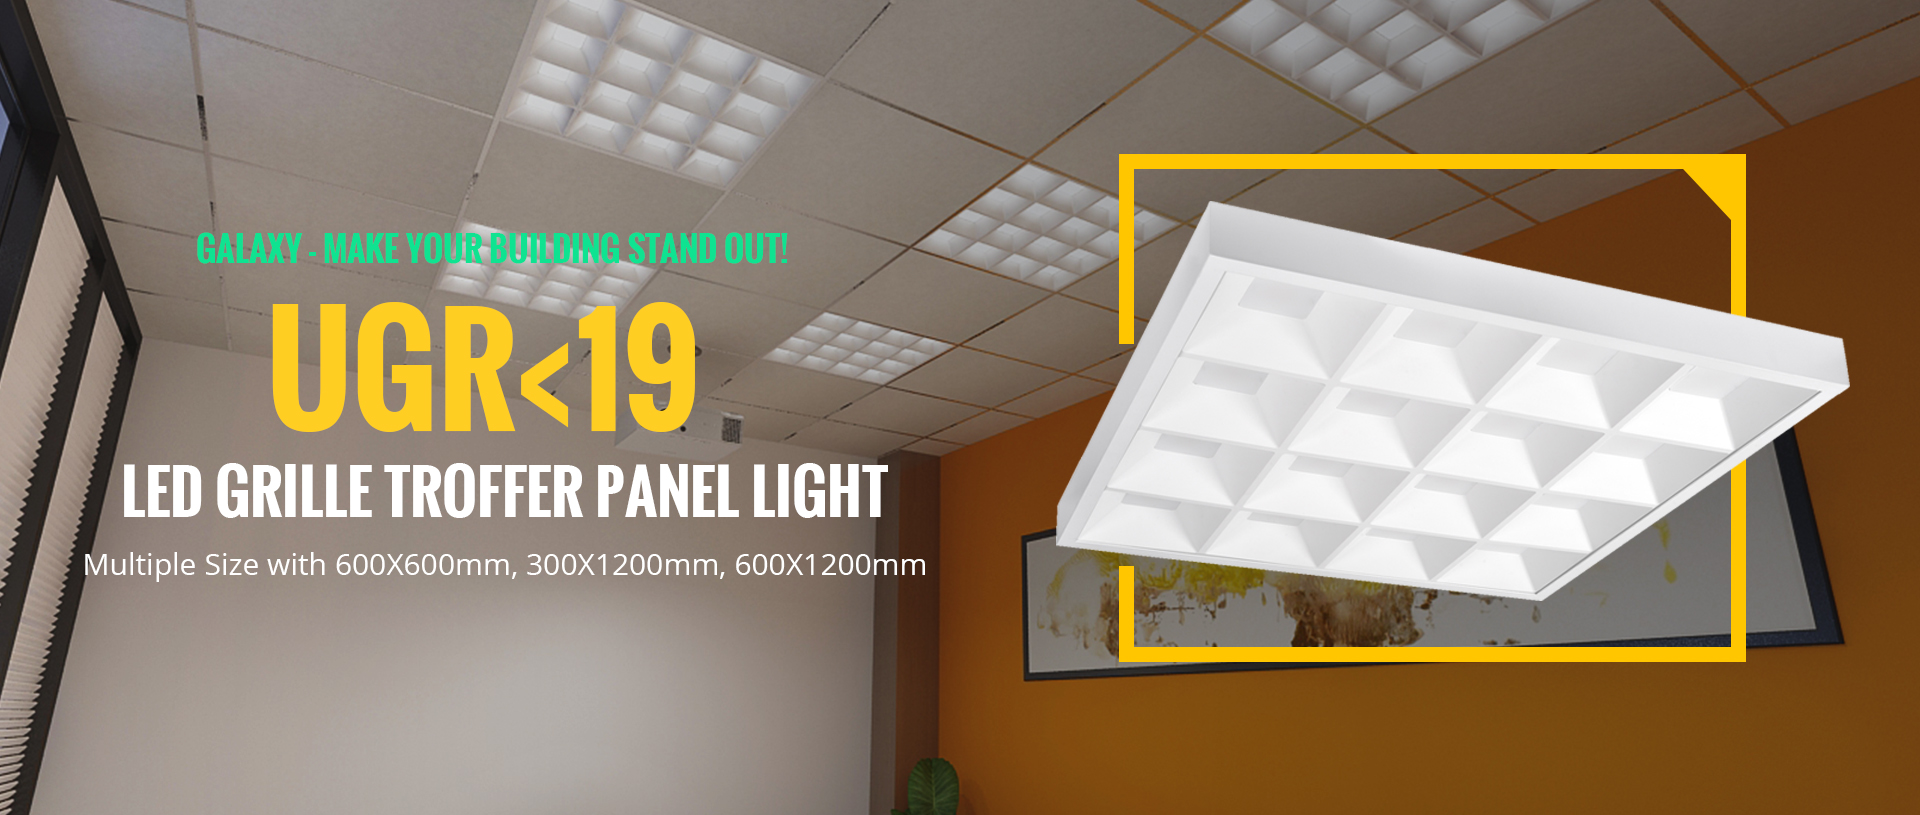 UGR<19 Grille Led Panel Light for Office